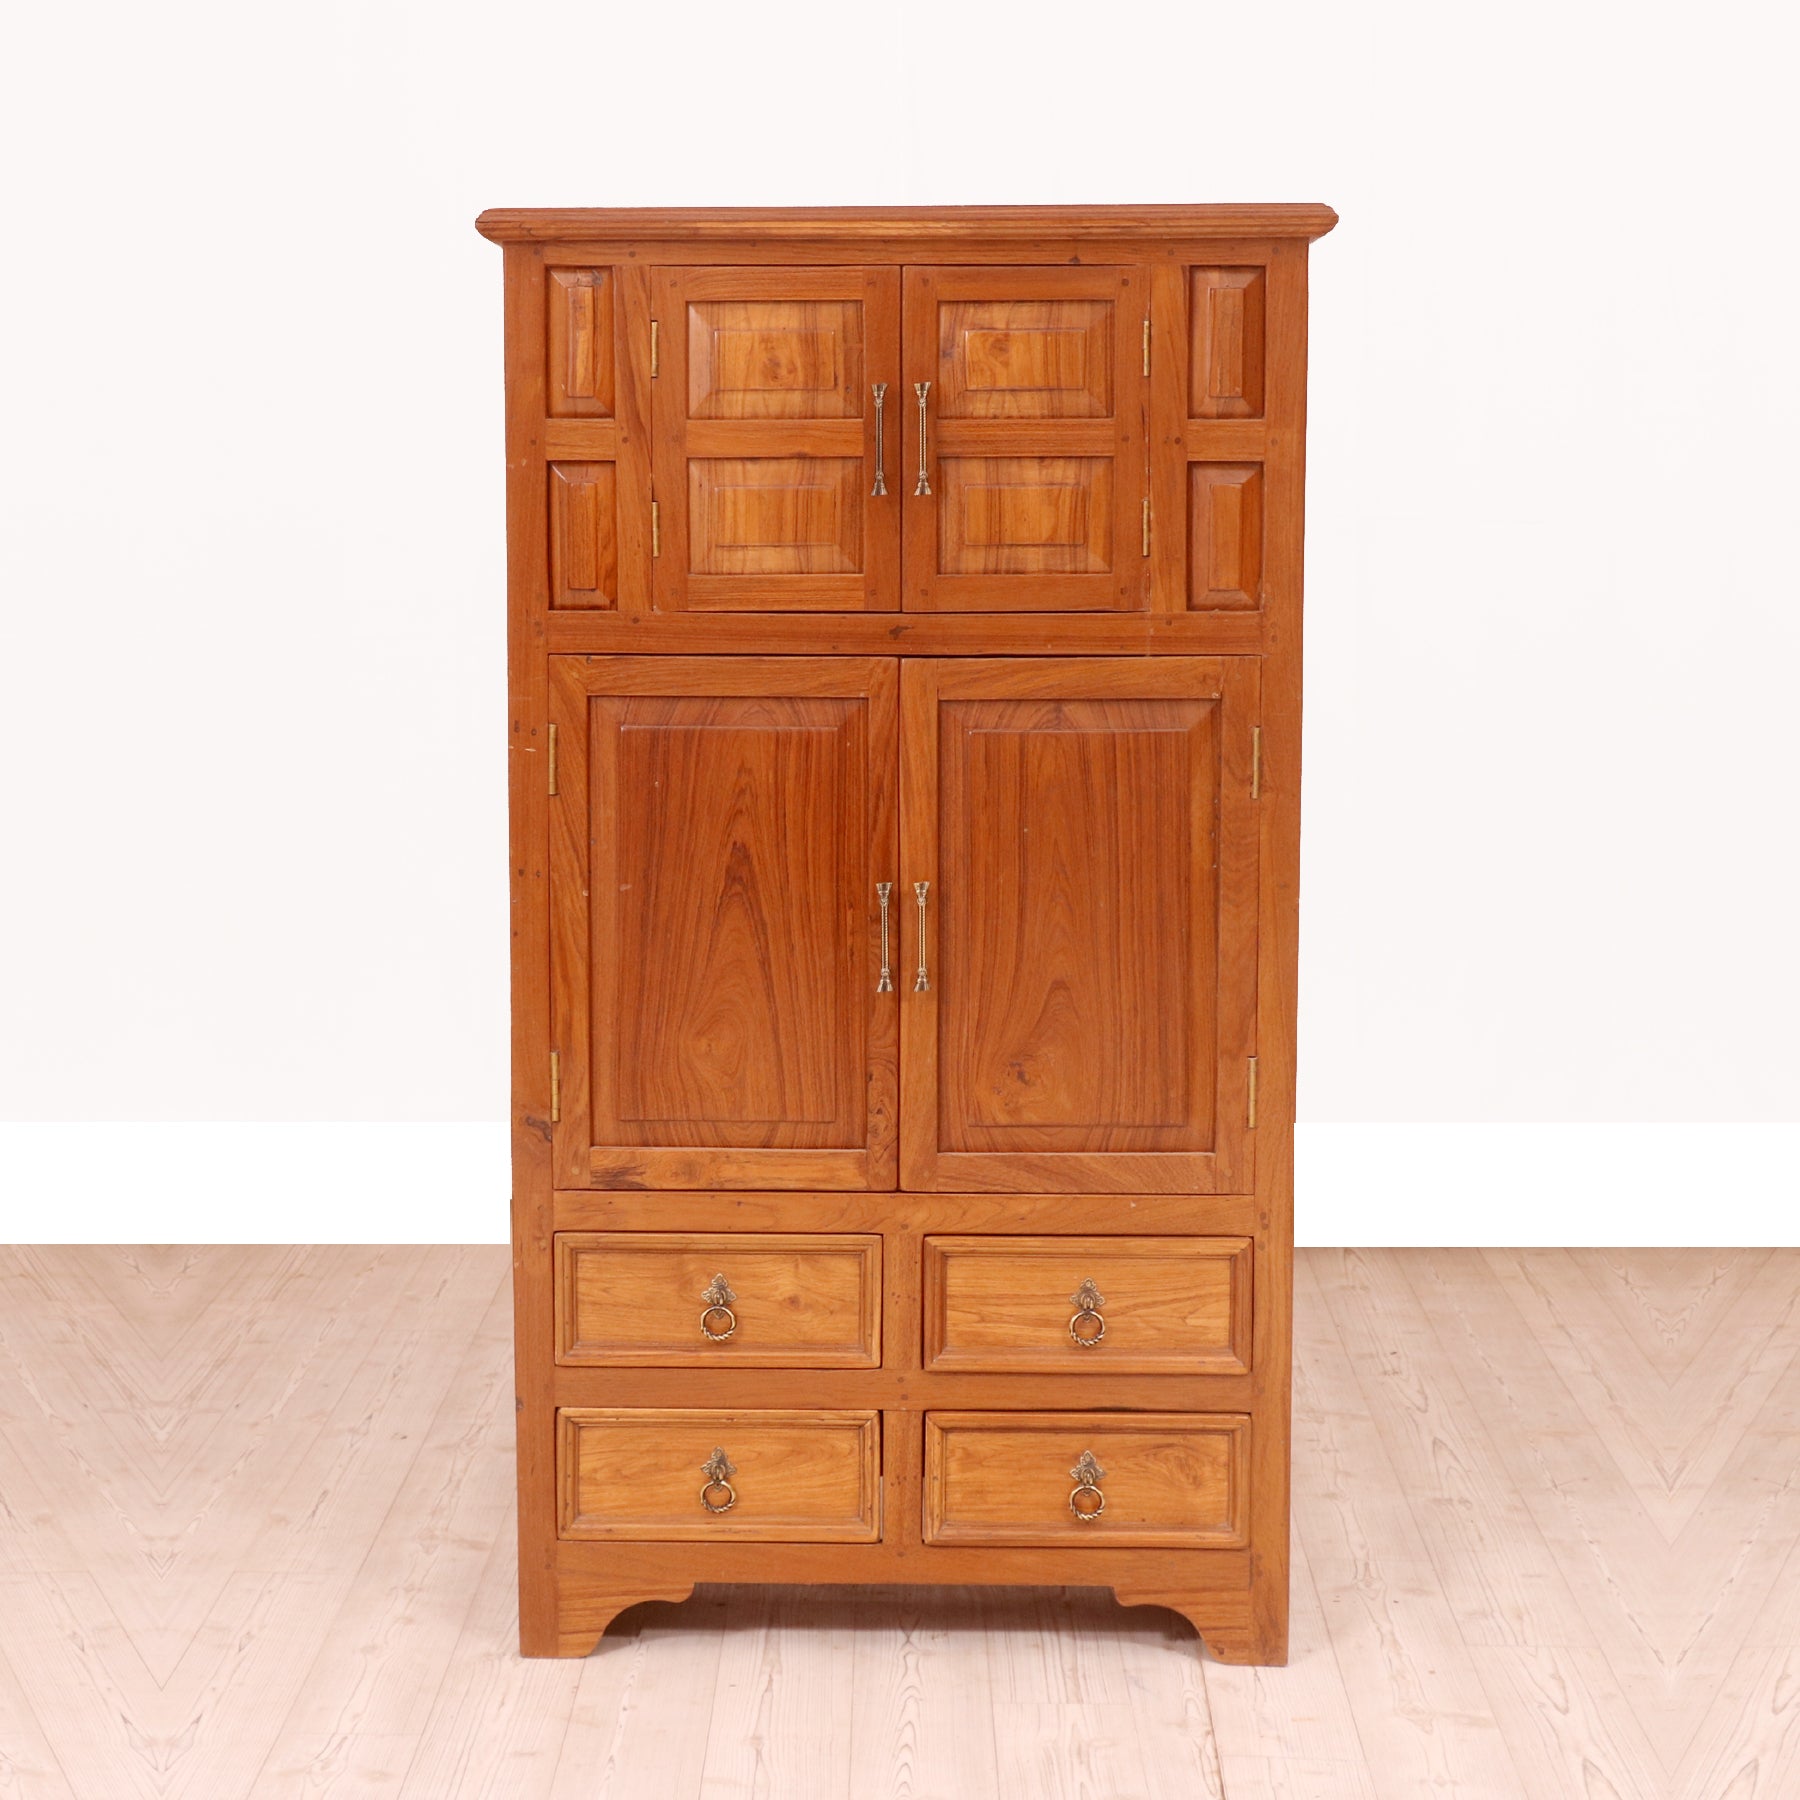 4 door and 4-drawer Cabinet Wardrobe